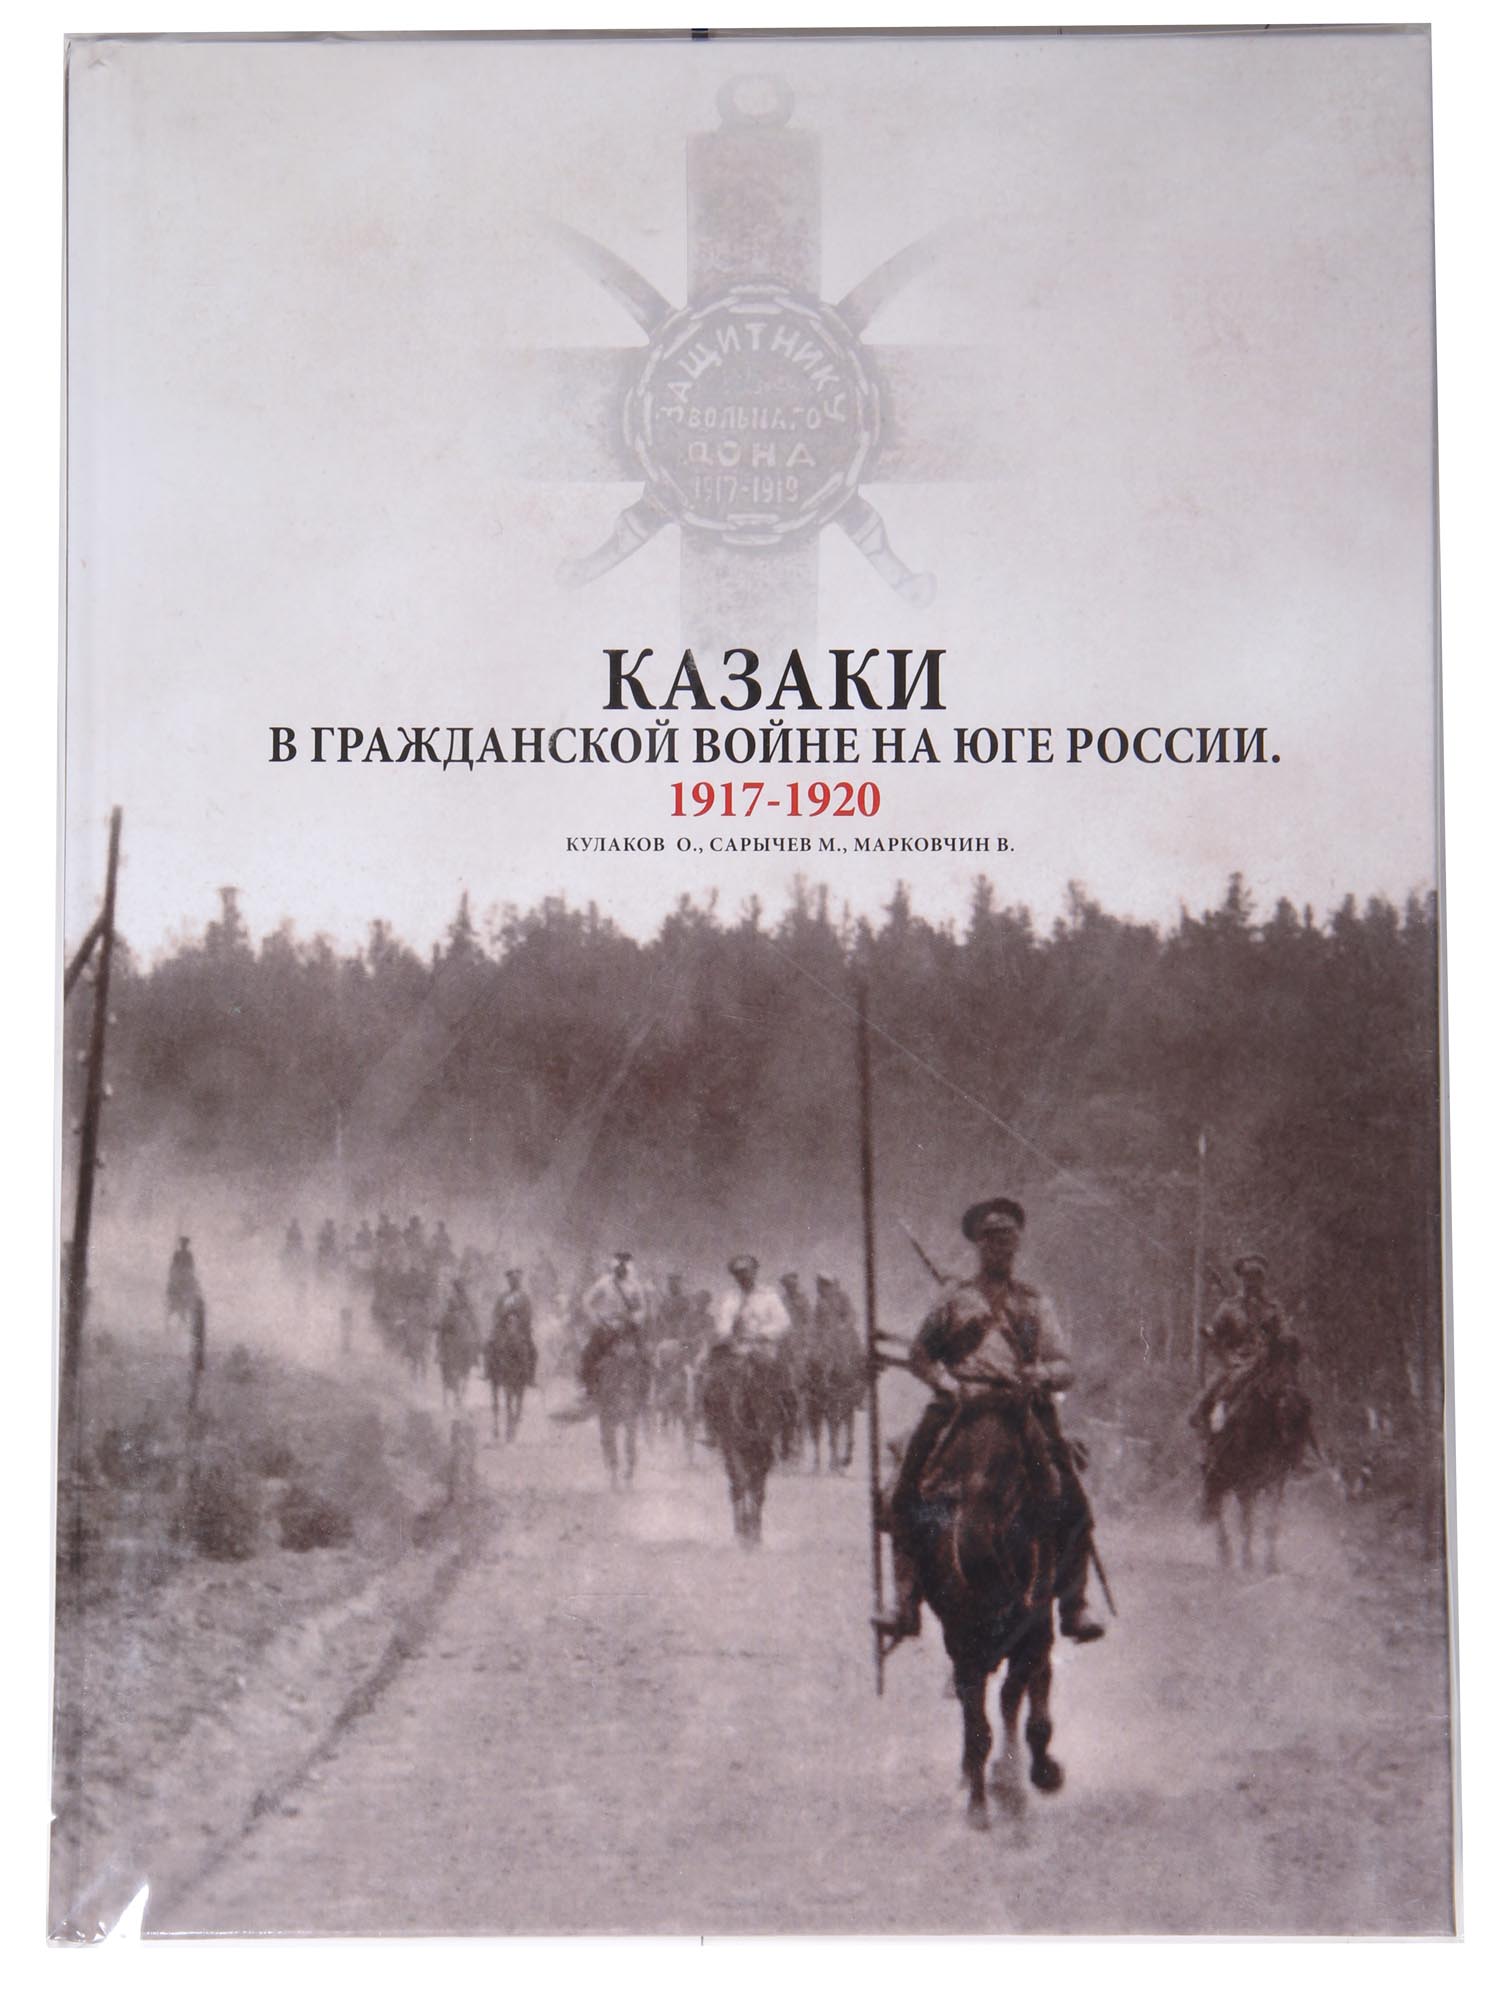 FOUR RUSSIAN COSSACKS HISTORY ALBUM BOOKS PIC-5